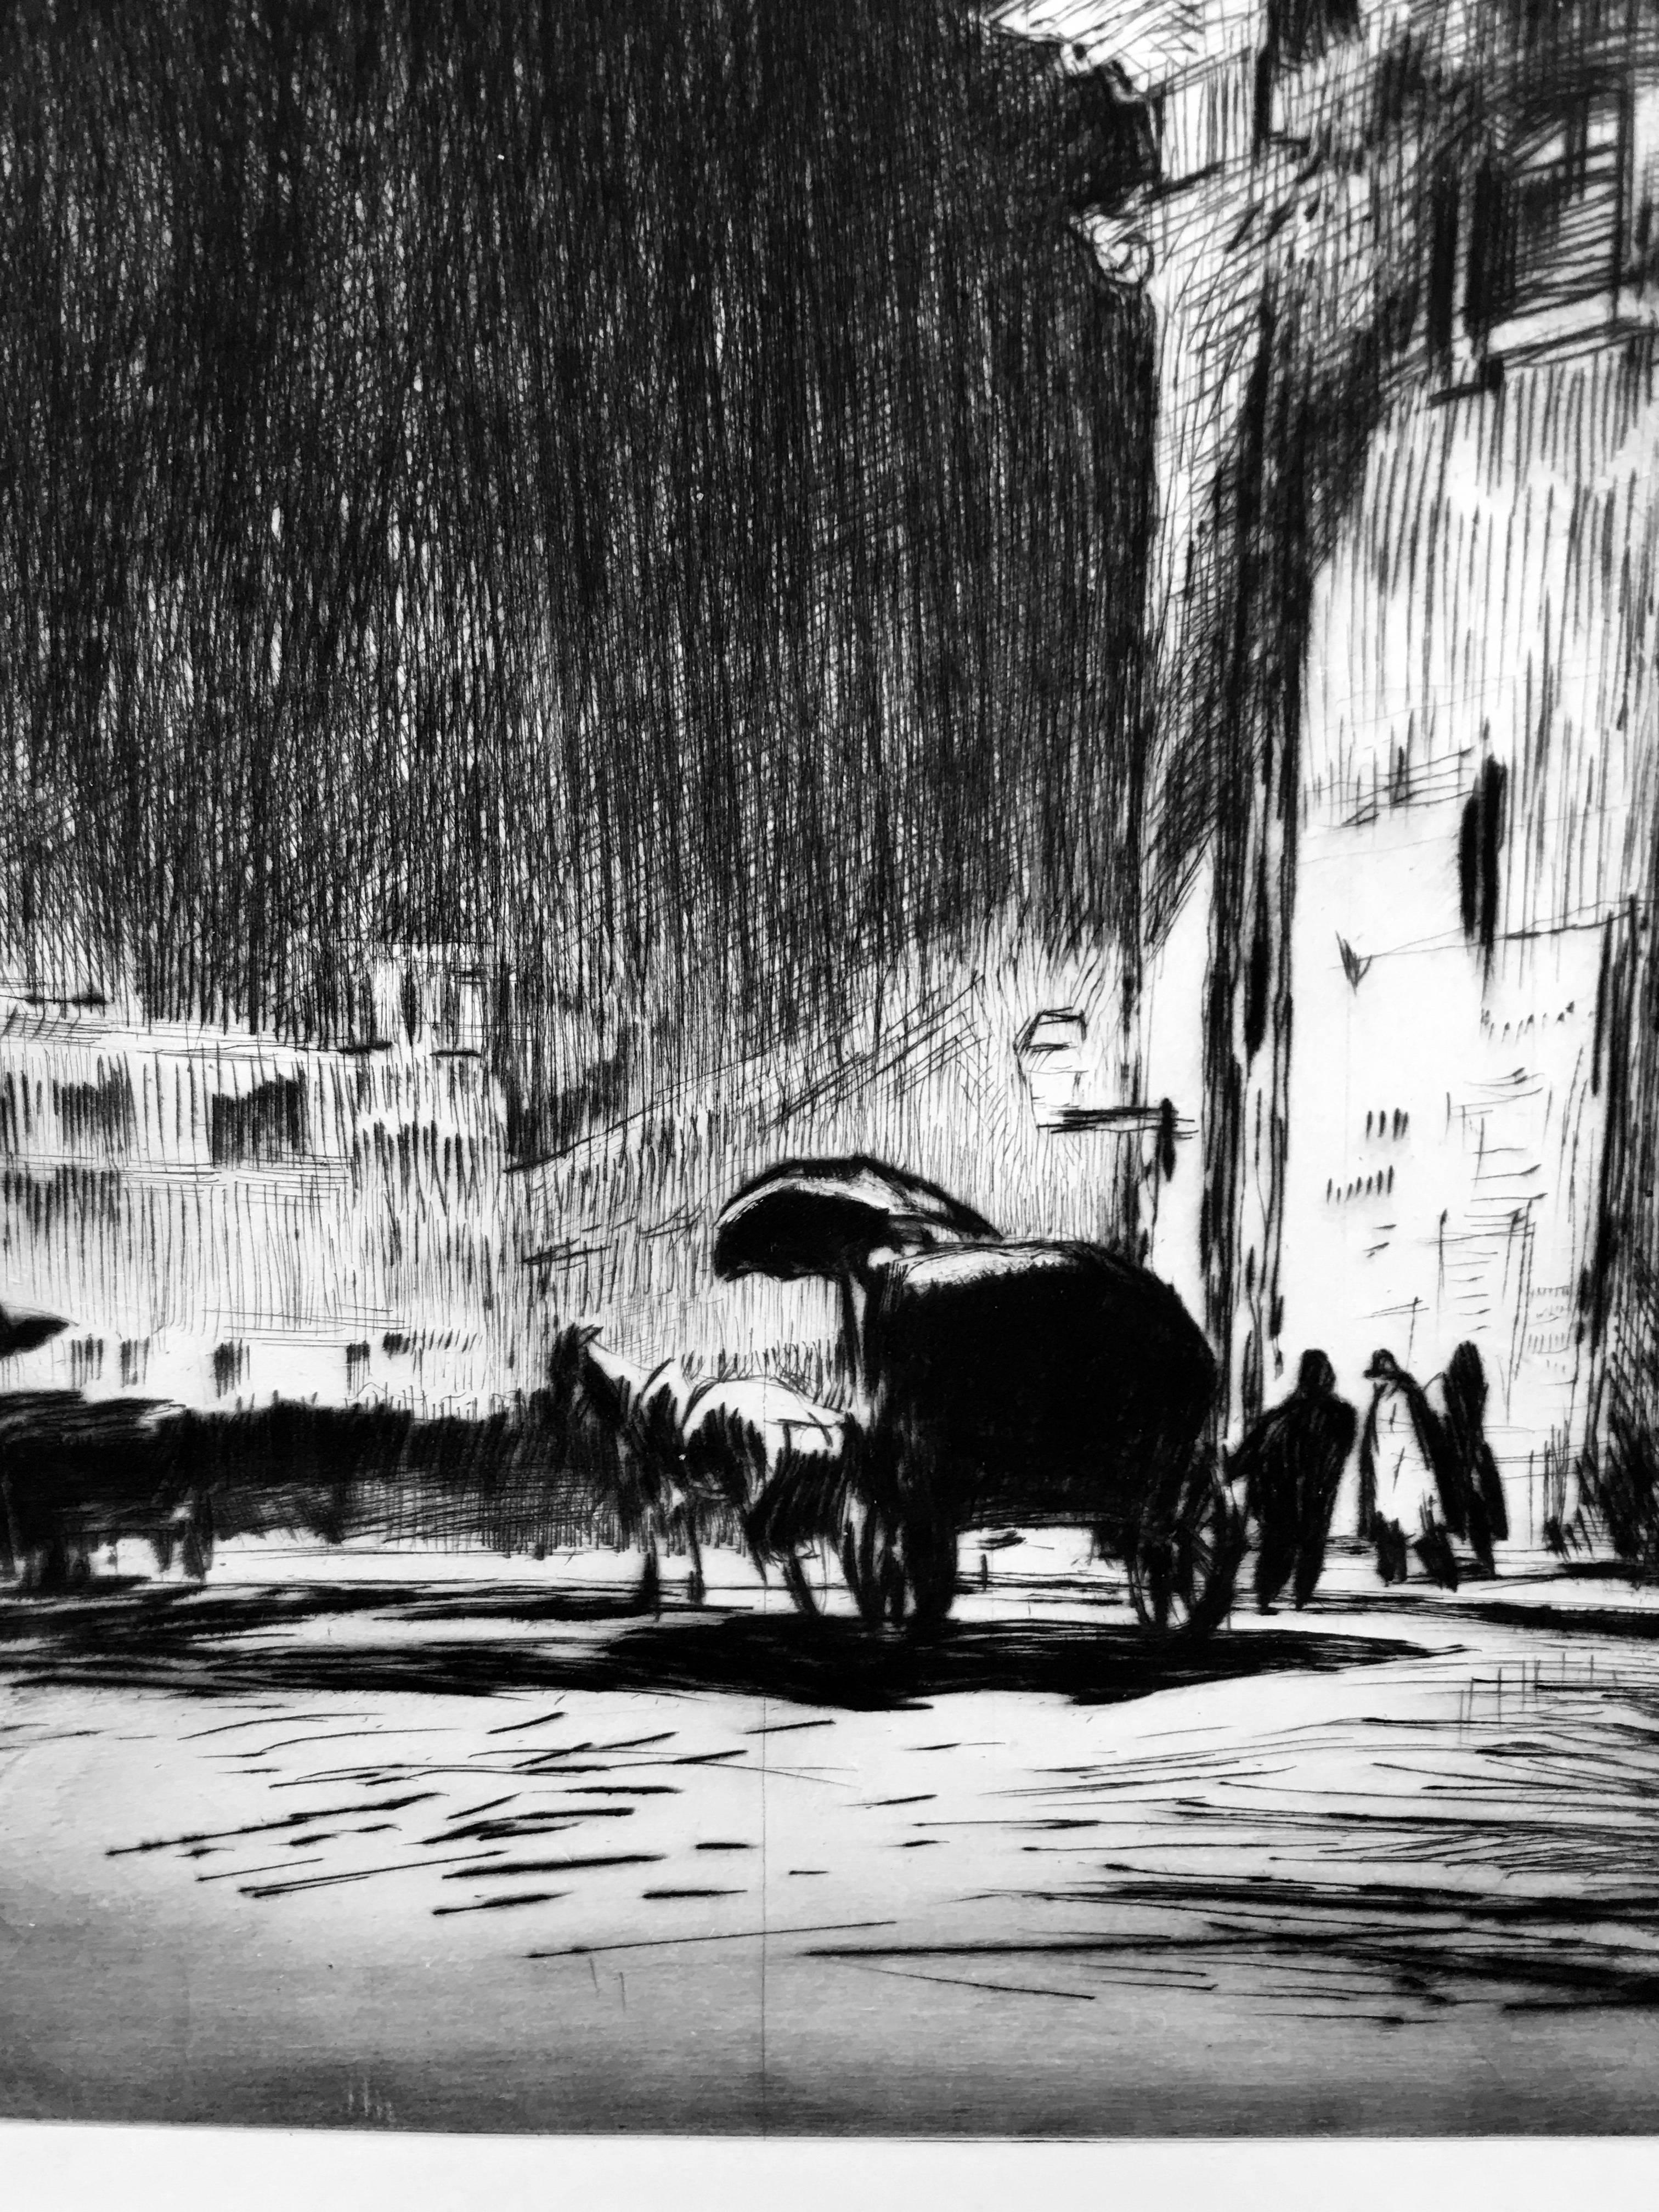 Rainy Night in Rome - Print by Sir Muirhead Bone